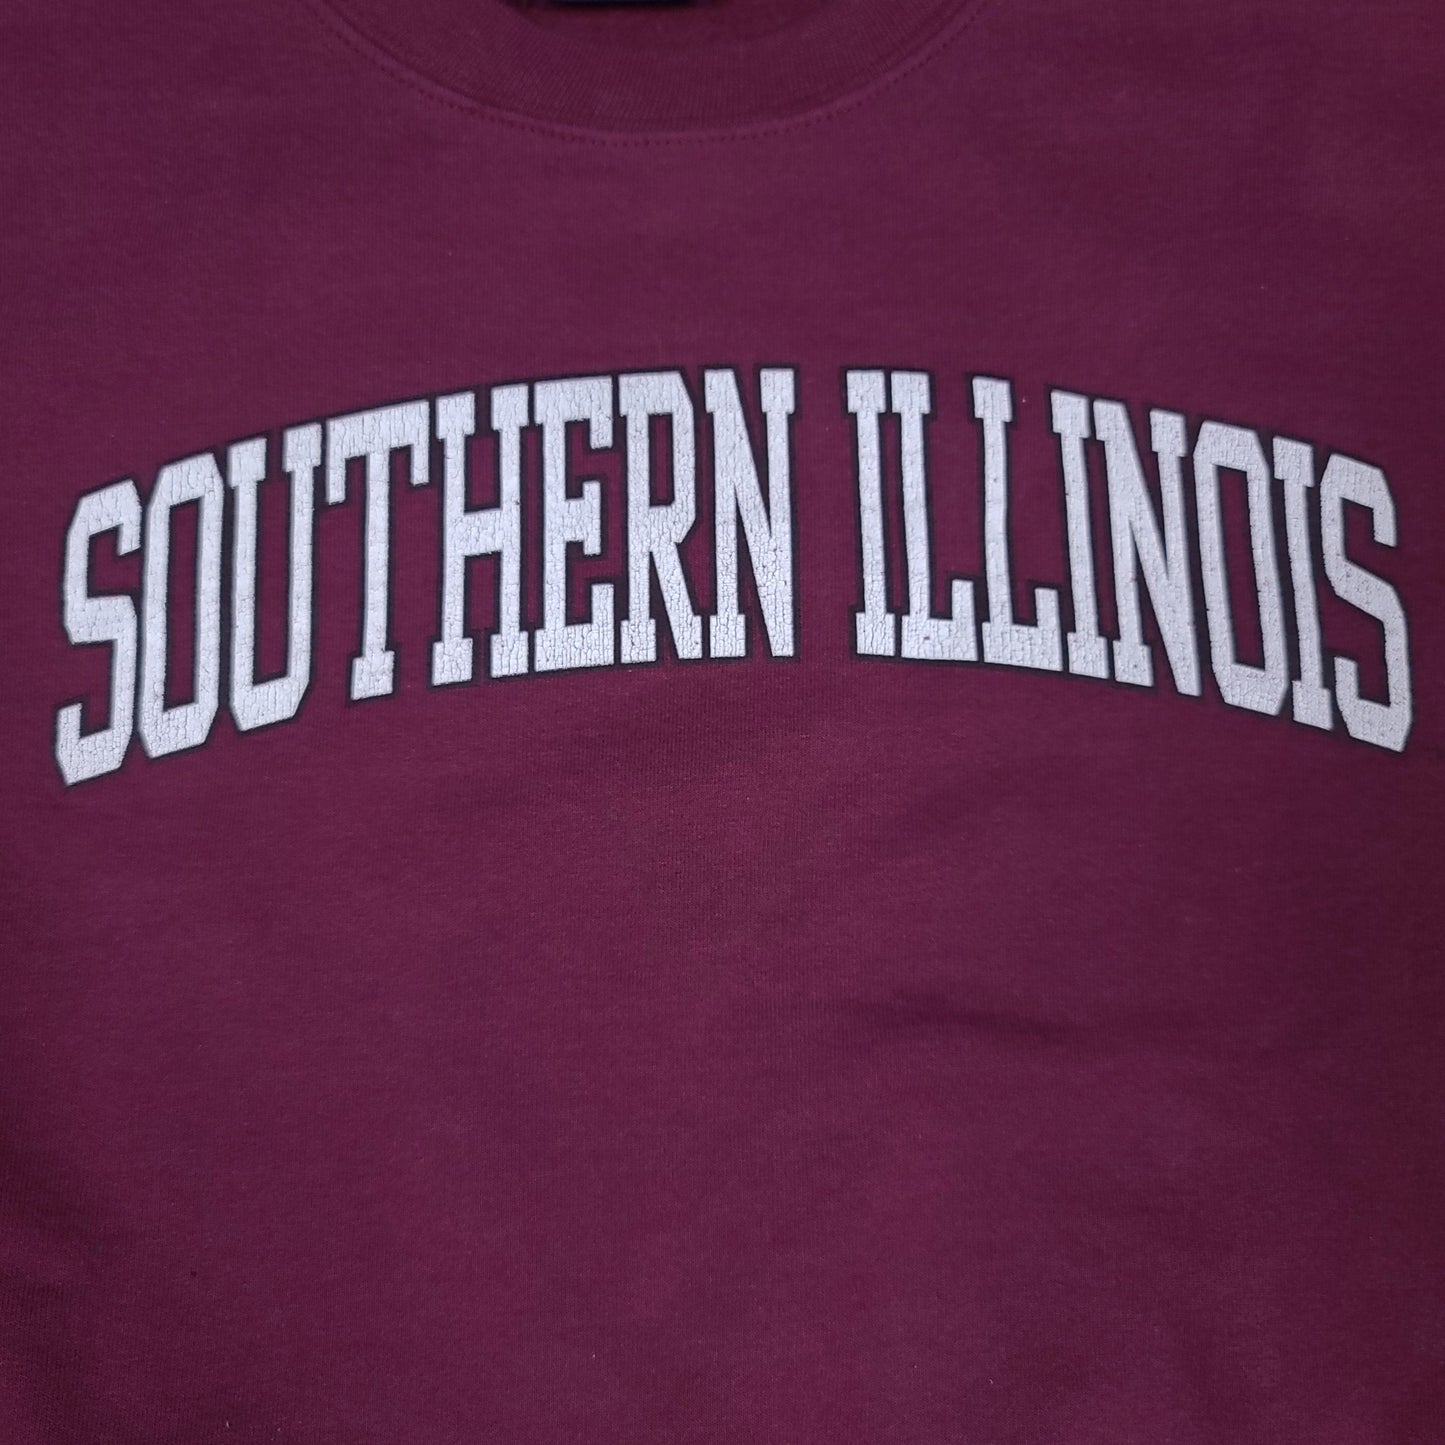 Vintage Southern Illinois University Maroon Sweatshirt